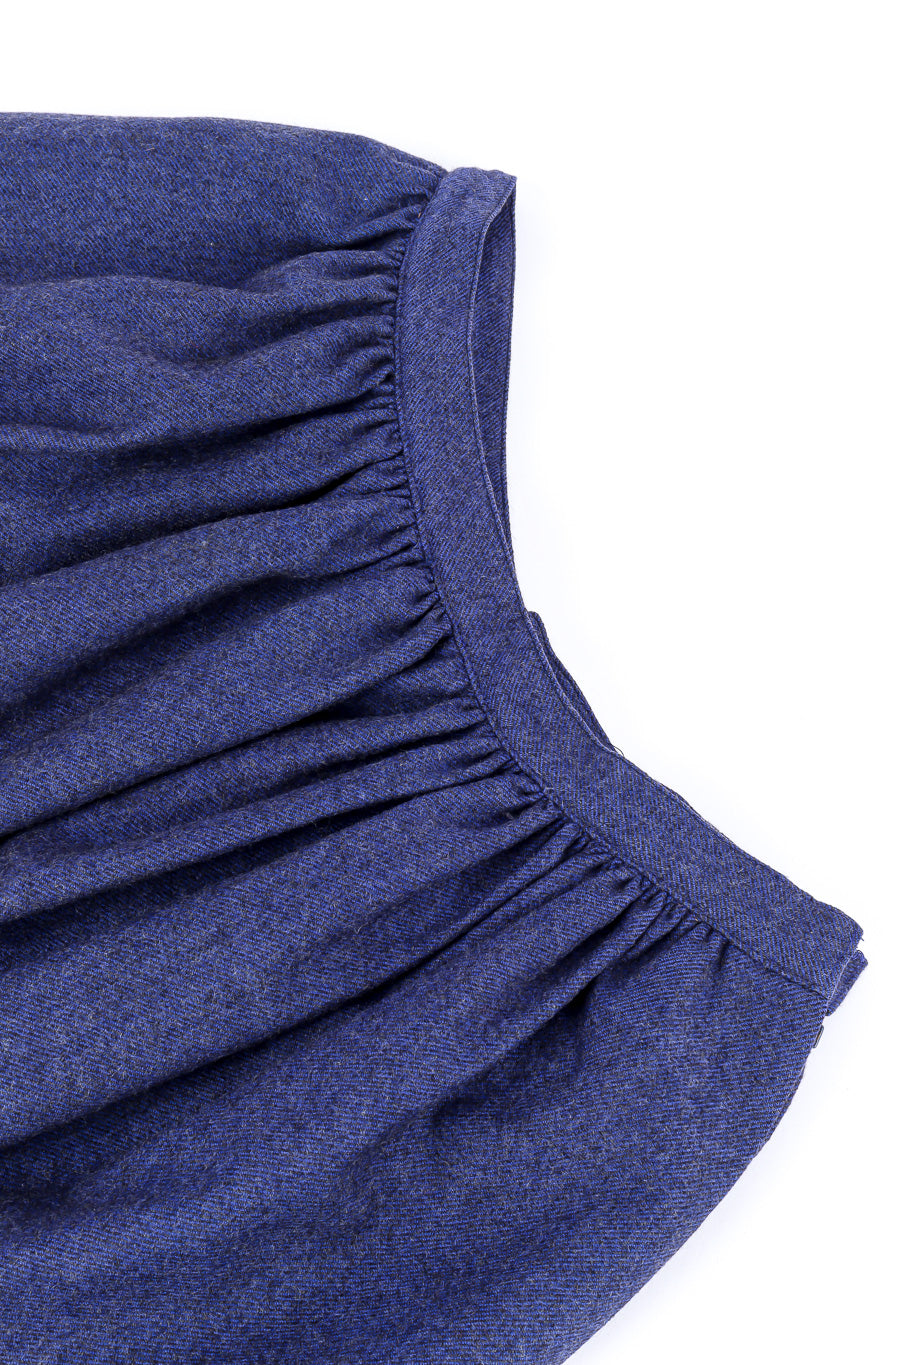 Valentino Boutique cotton denim top and skirt set waist details @recessla